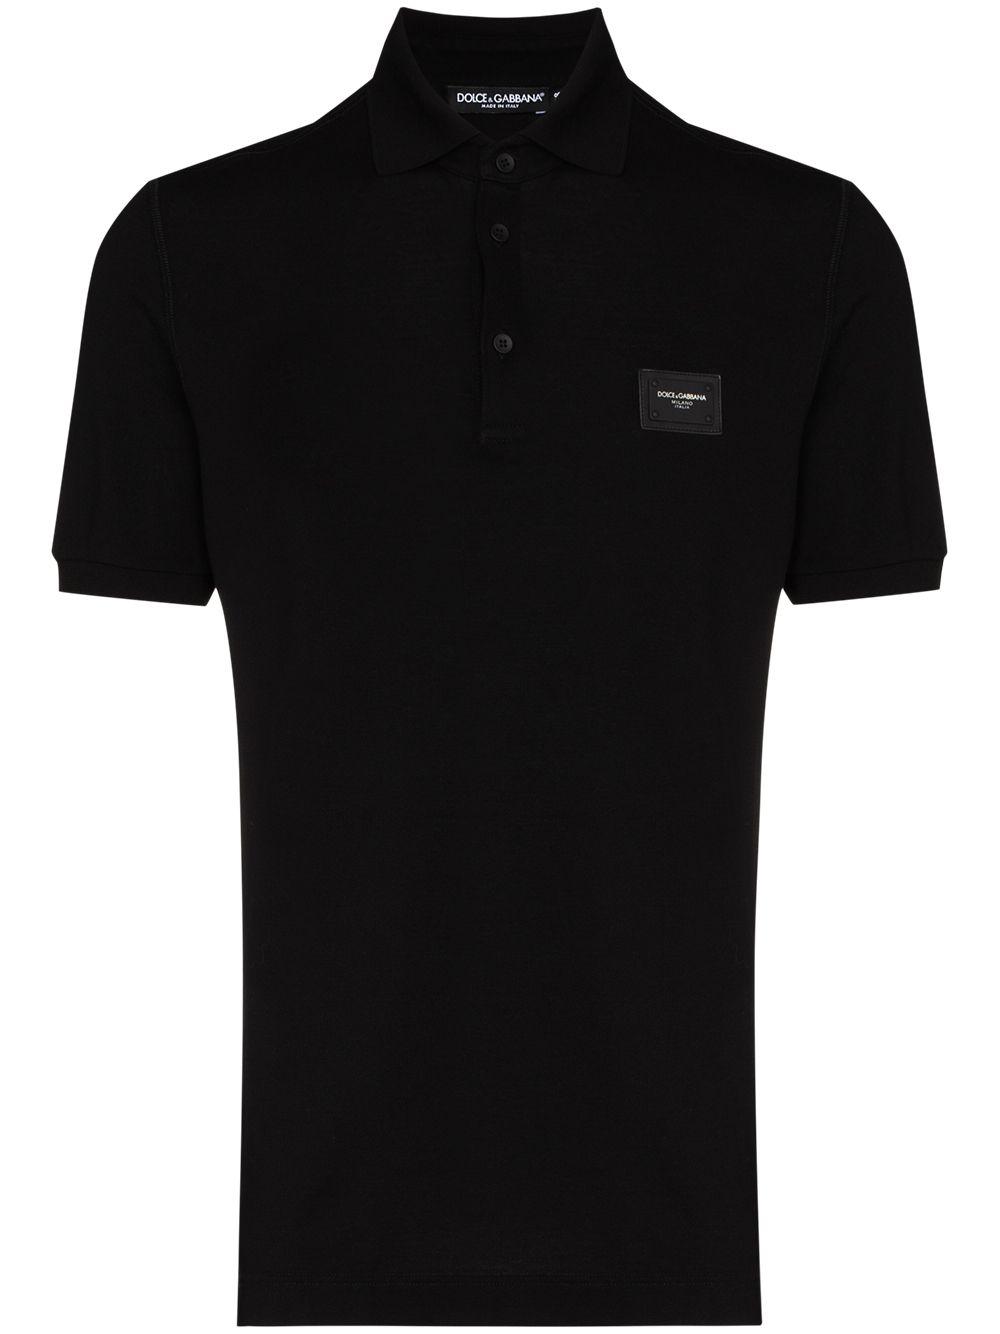 Dolce & Gabbana Logo Plaque Polo Shirt in Black for Men - Lyst